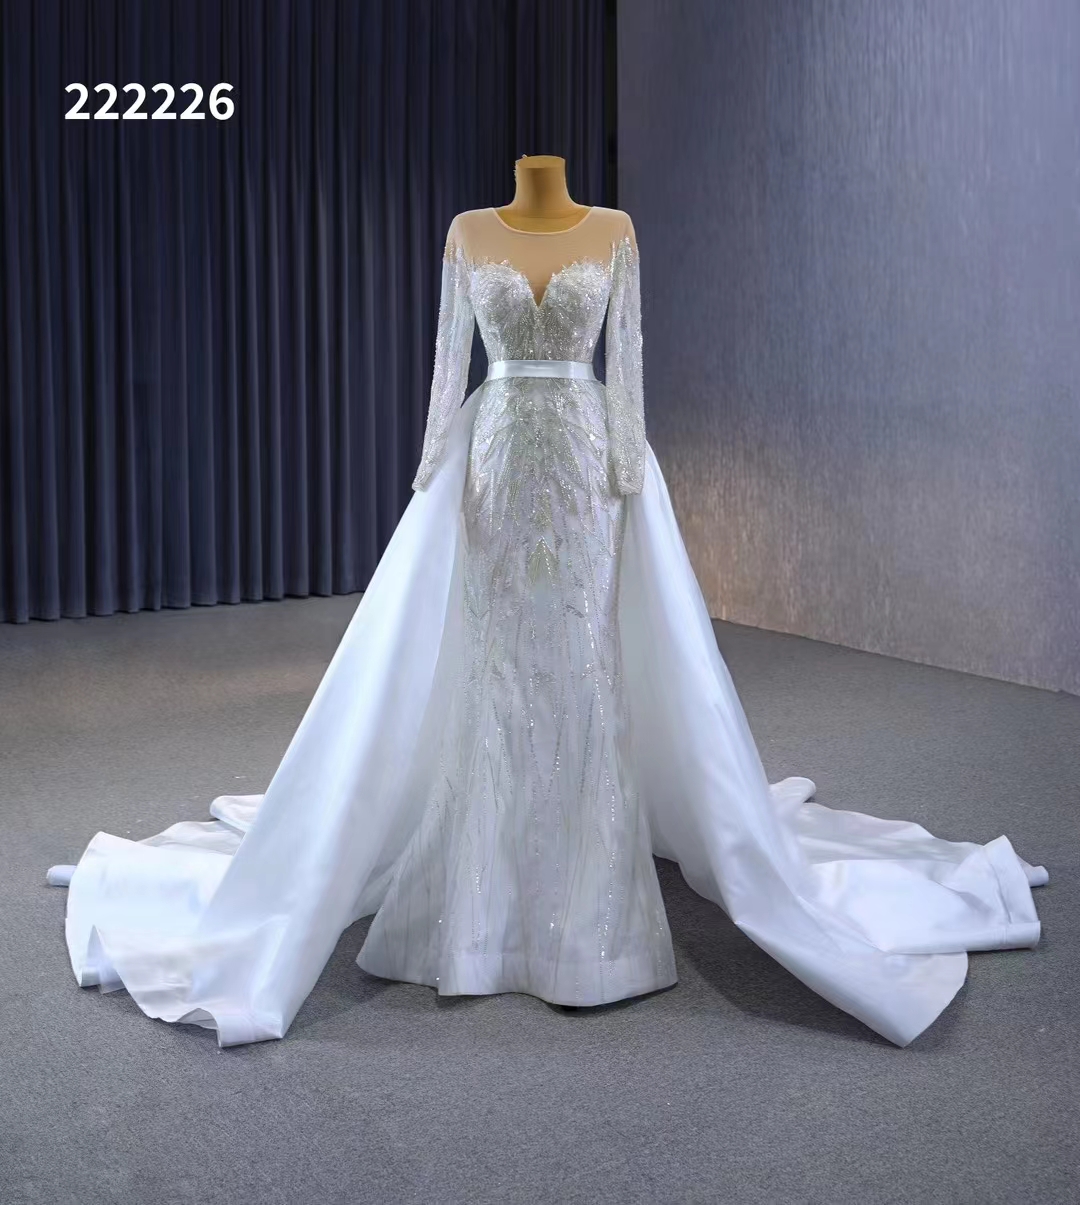 Sweetheart Wedding Dress Collar Train Long sleeved Fashion Luxury SM222226